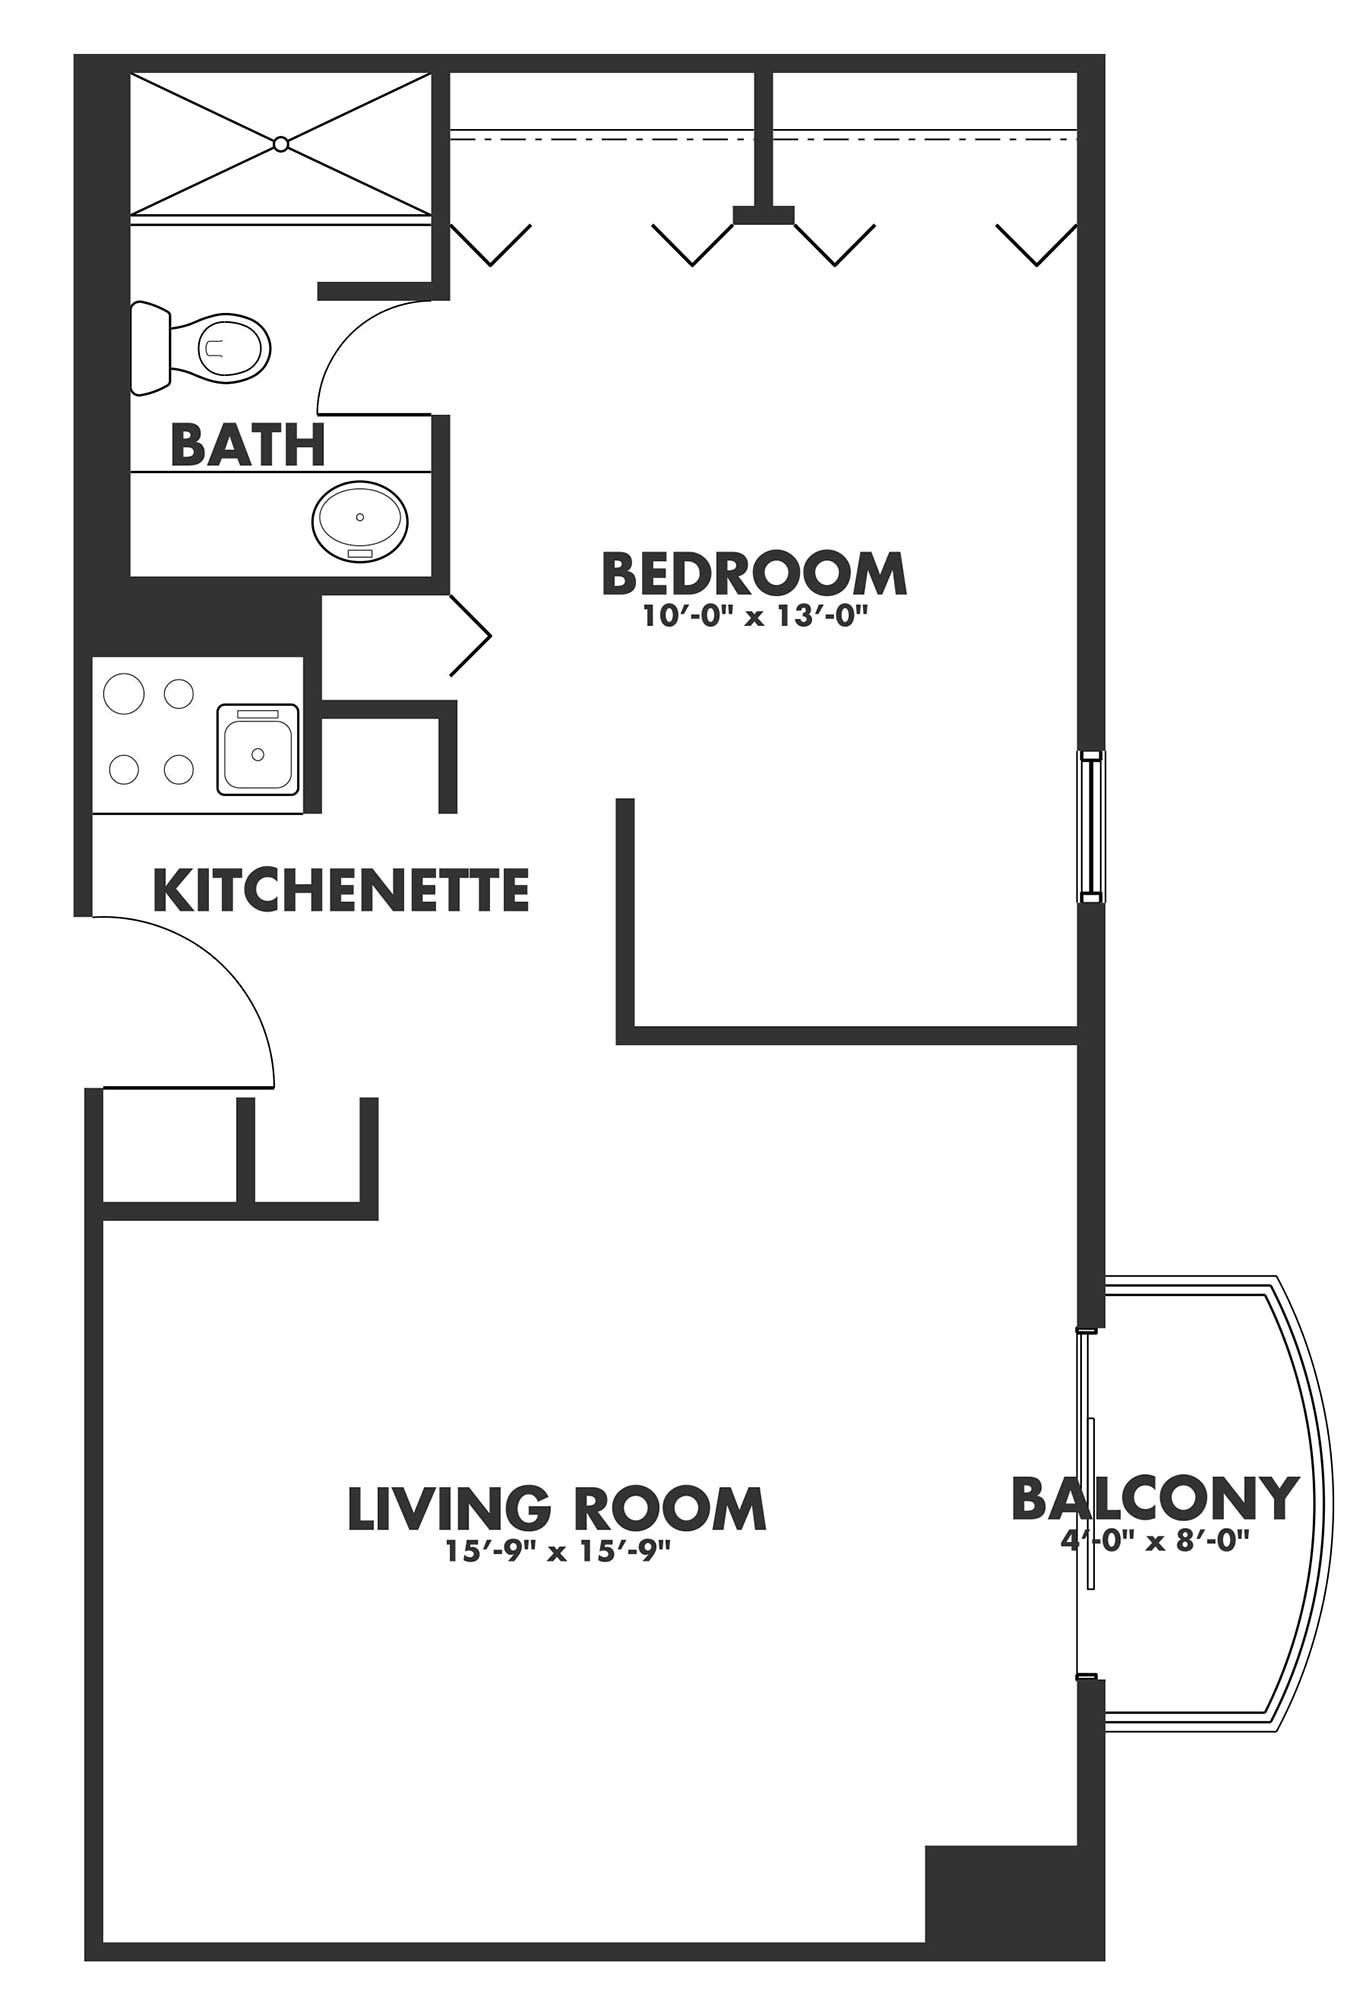 a one bedroom embury floorplan at Kingswood Senior Living Located in Kansas City, MO.